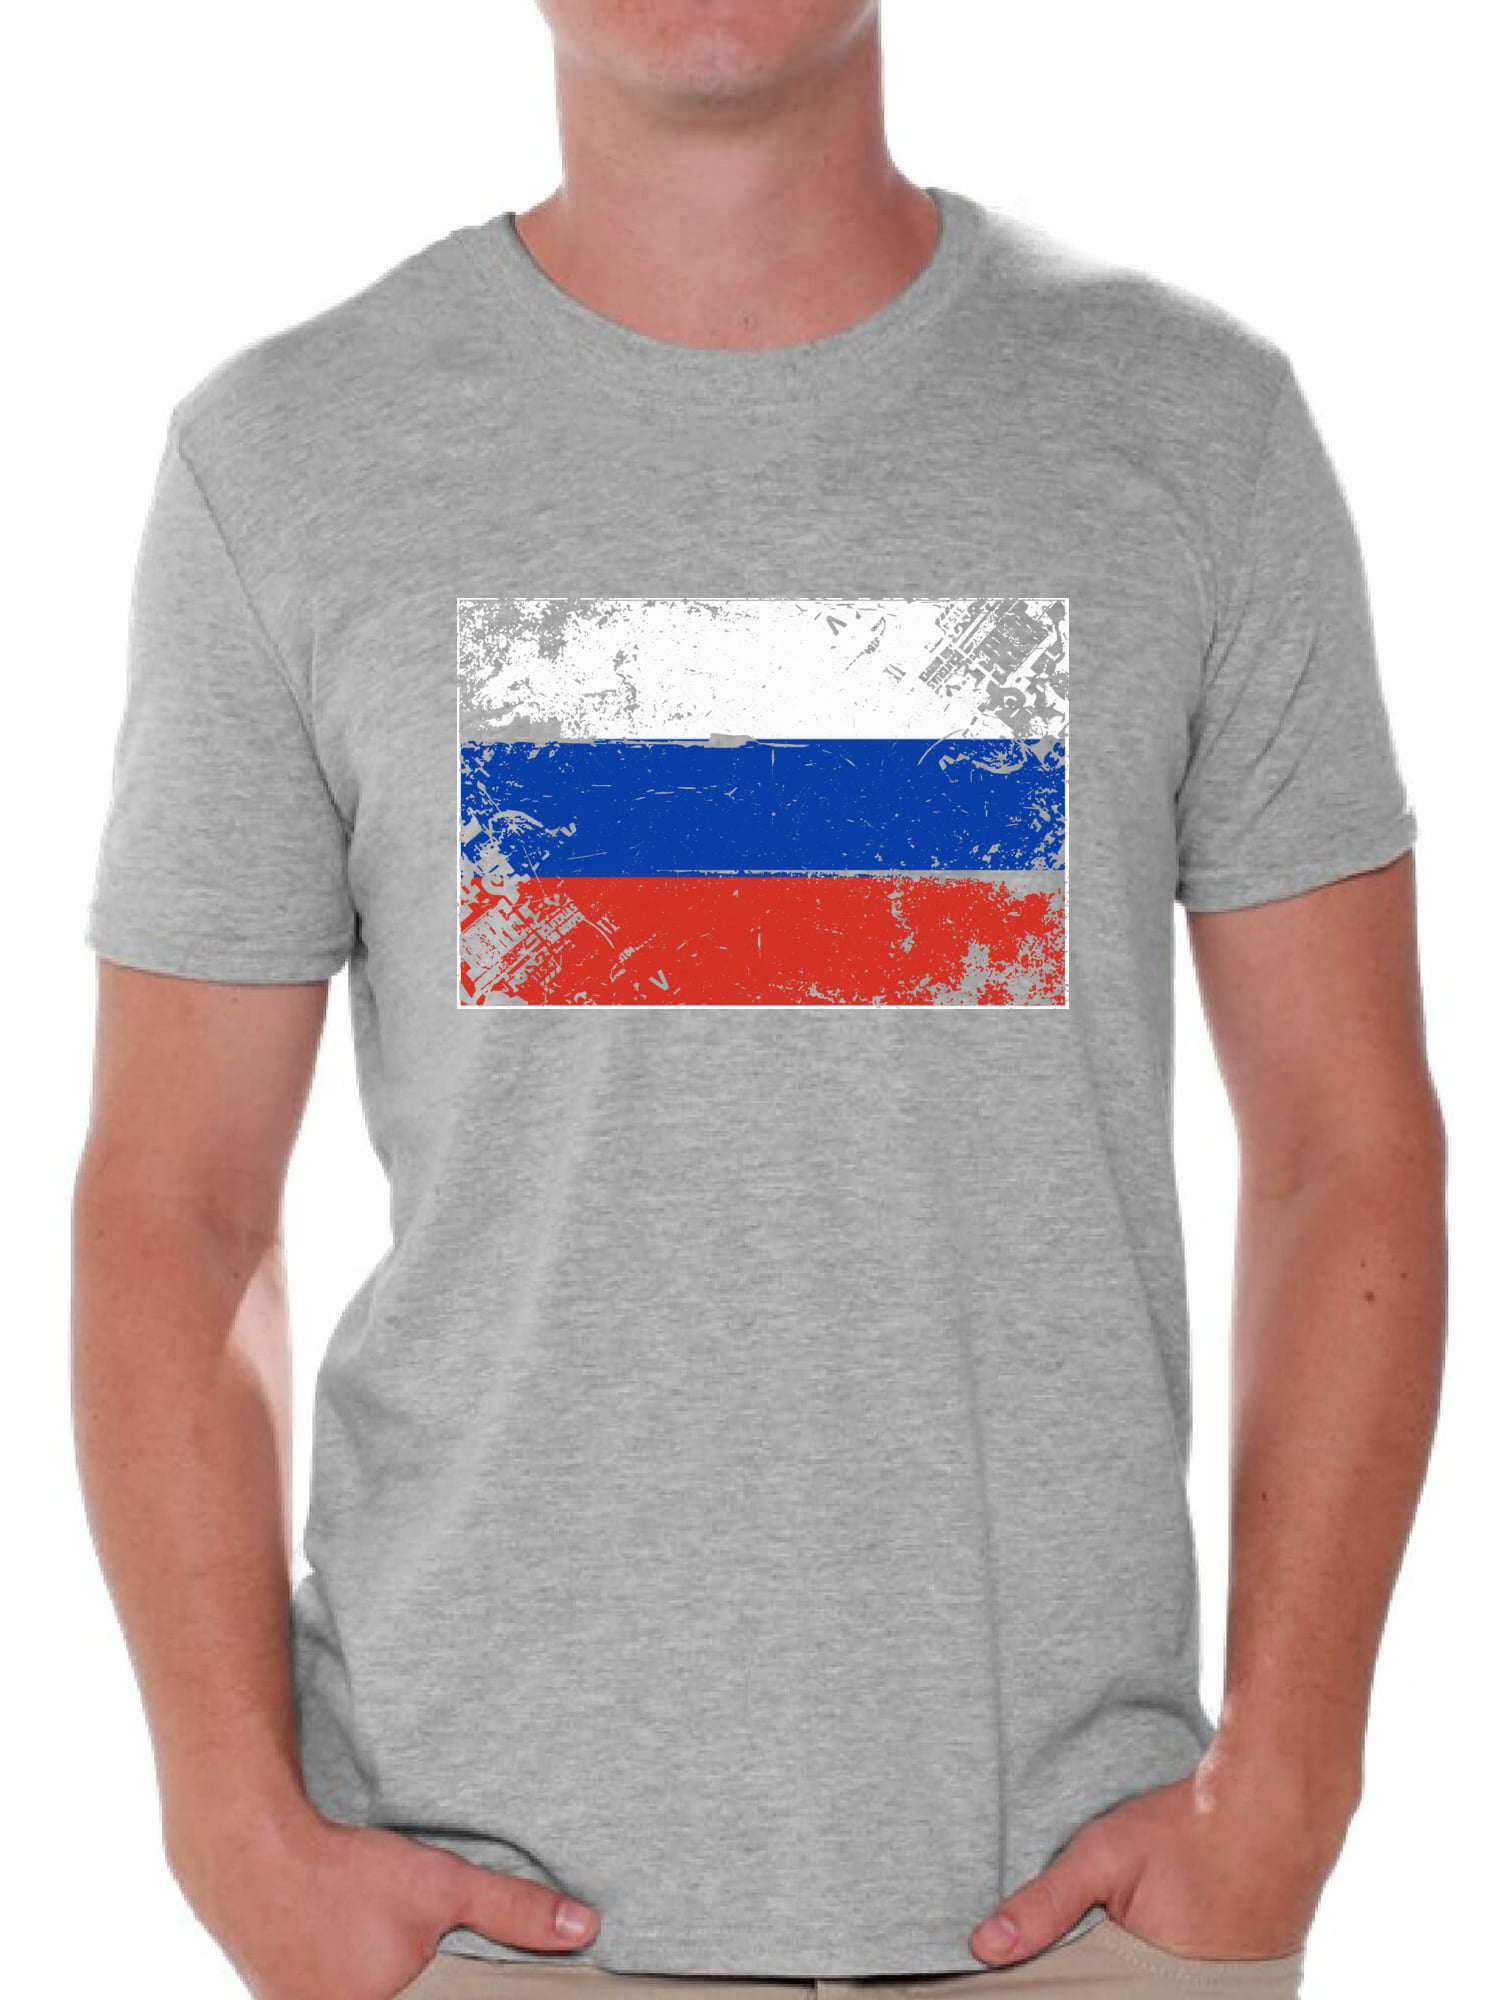 RUSSIAN T-SHIRTS MENS FUNNY COOL NOVELTY RUSSIA FLAG JOKE SLOGAN GIFTS T-SHIRT 